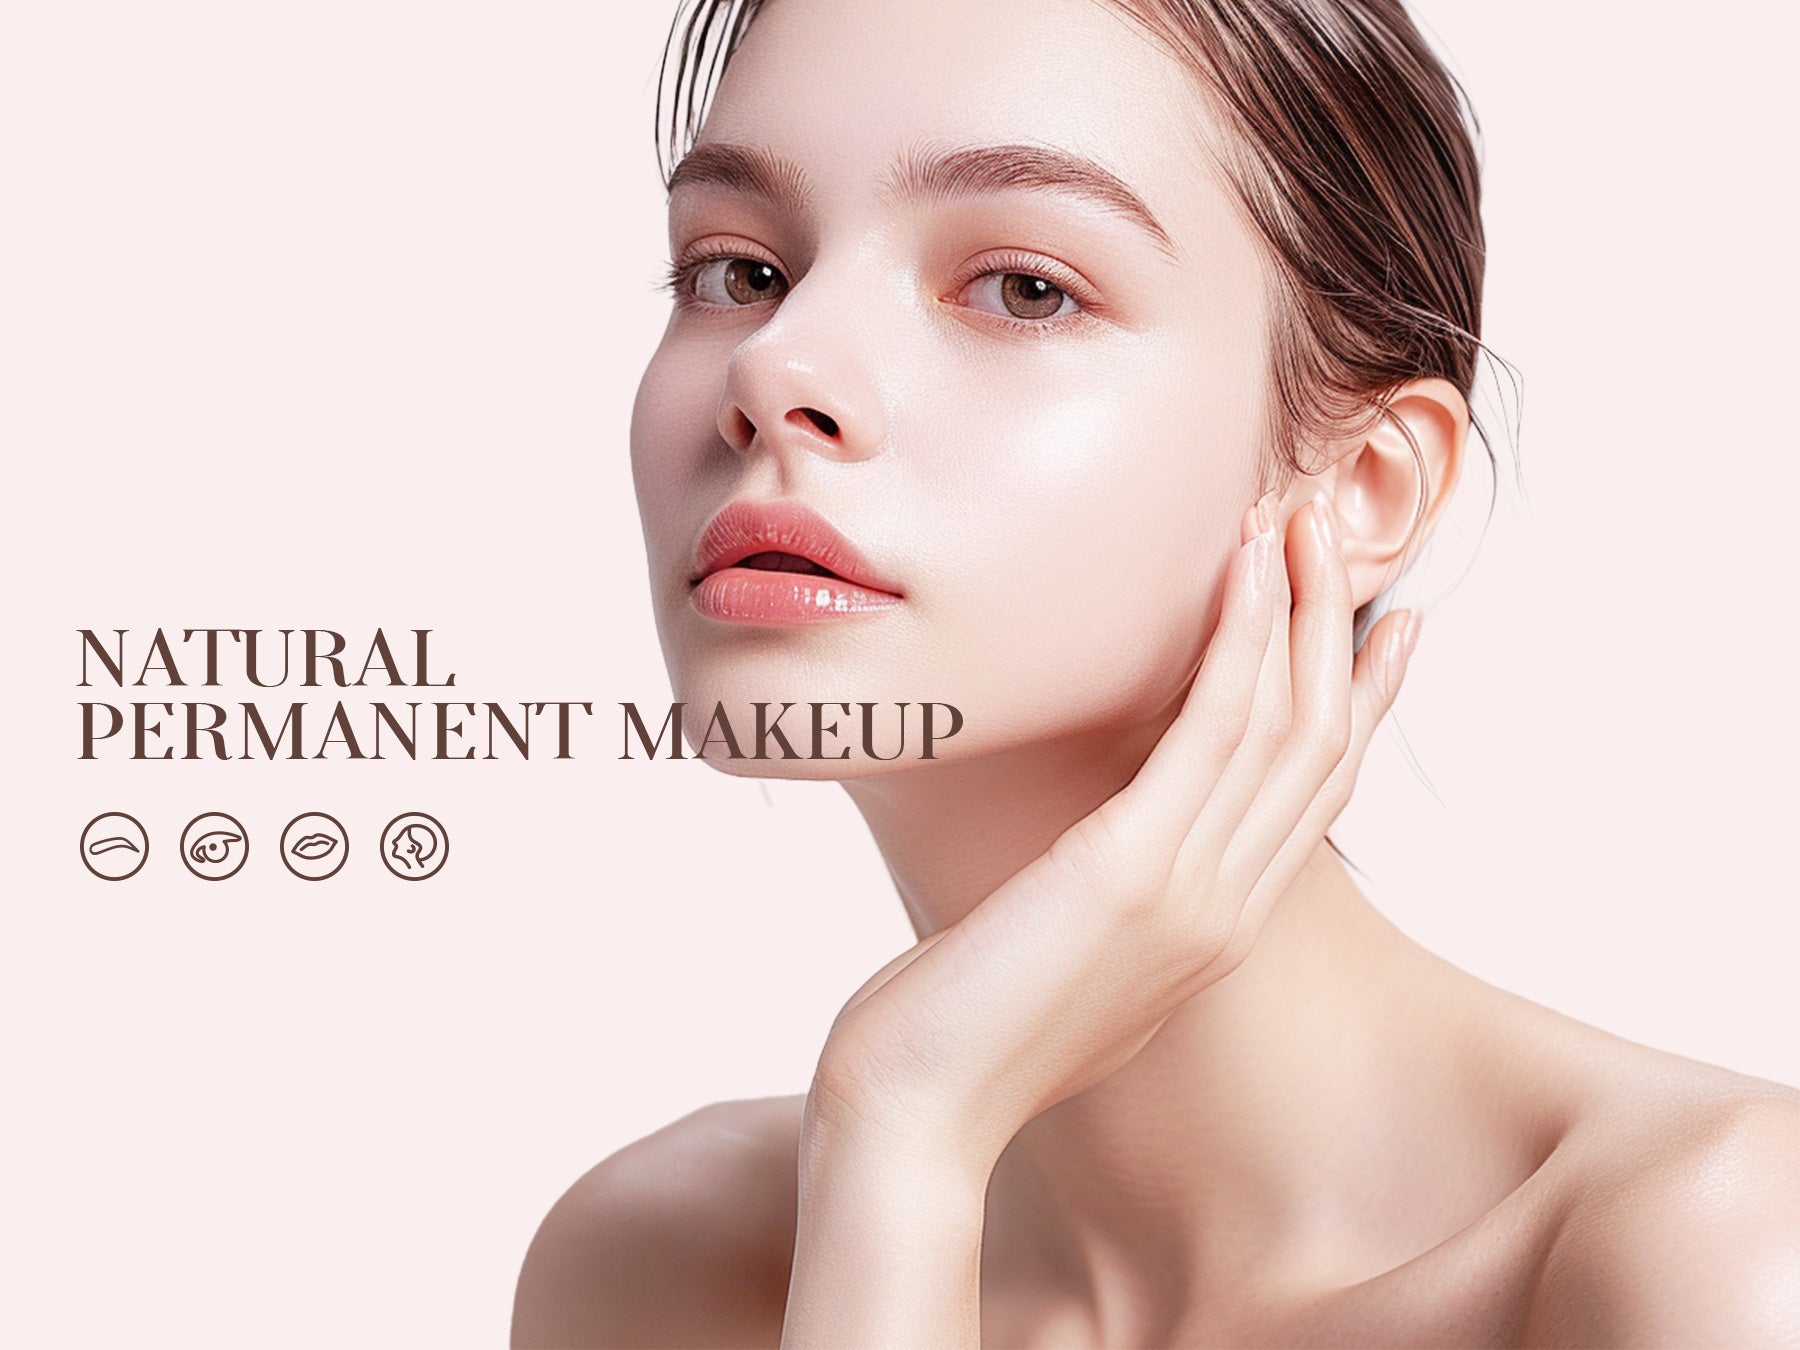 Does Permanent Makeup Look Natural?